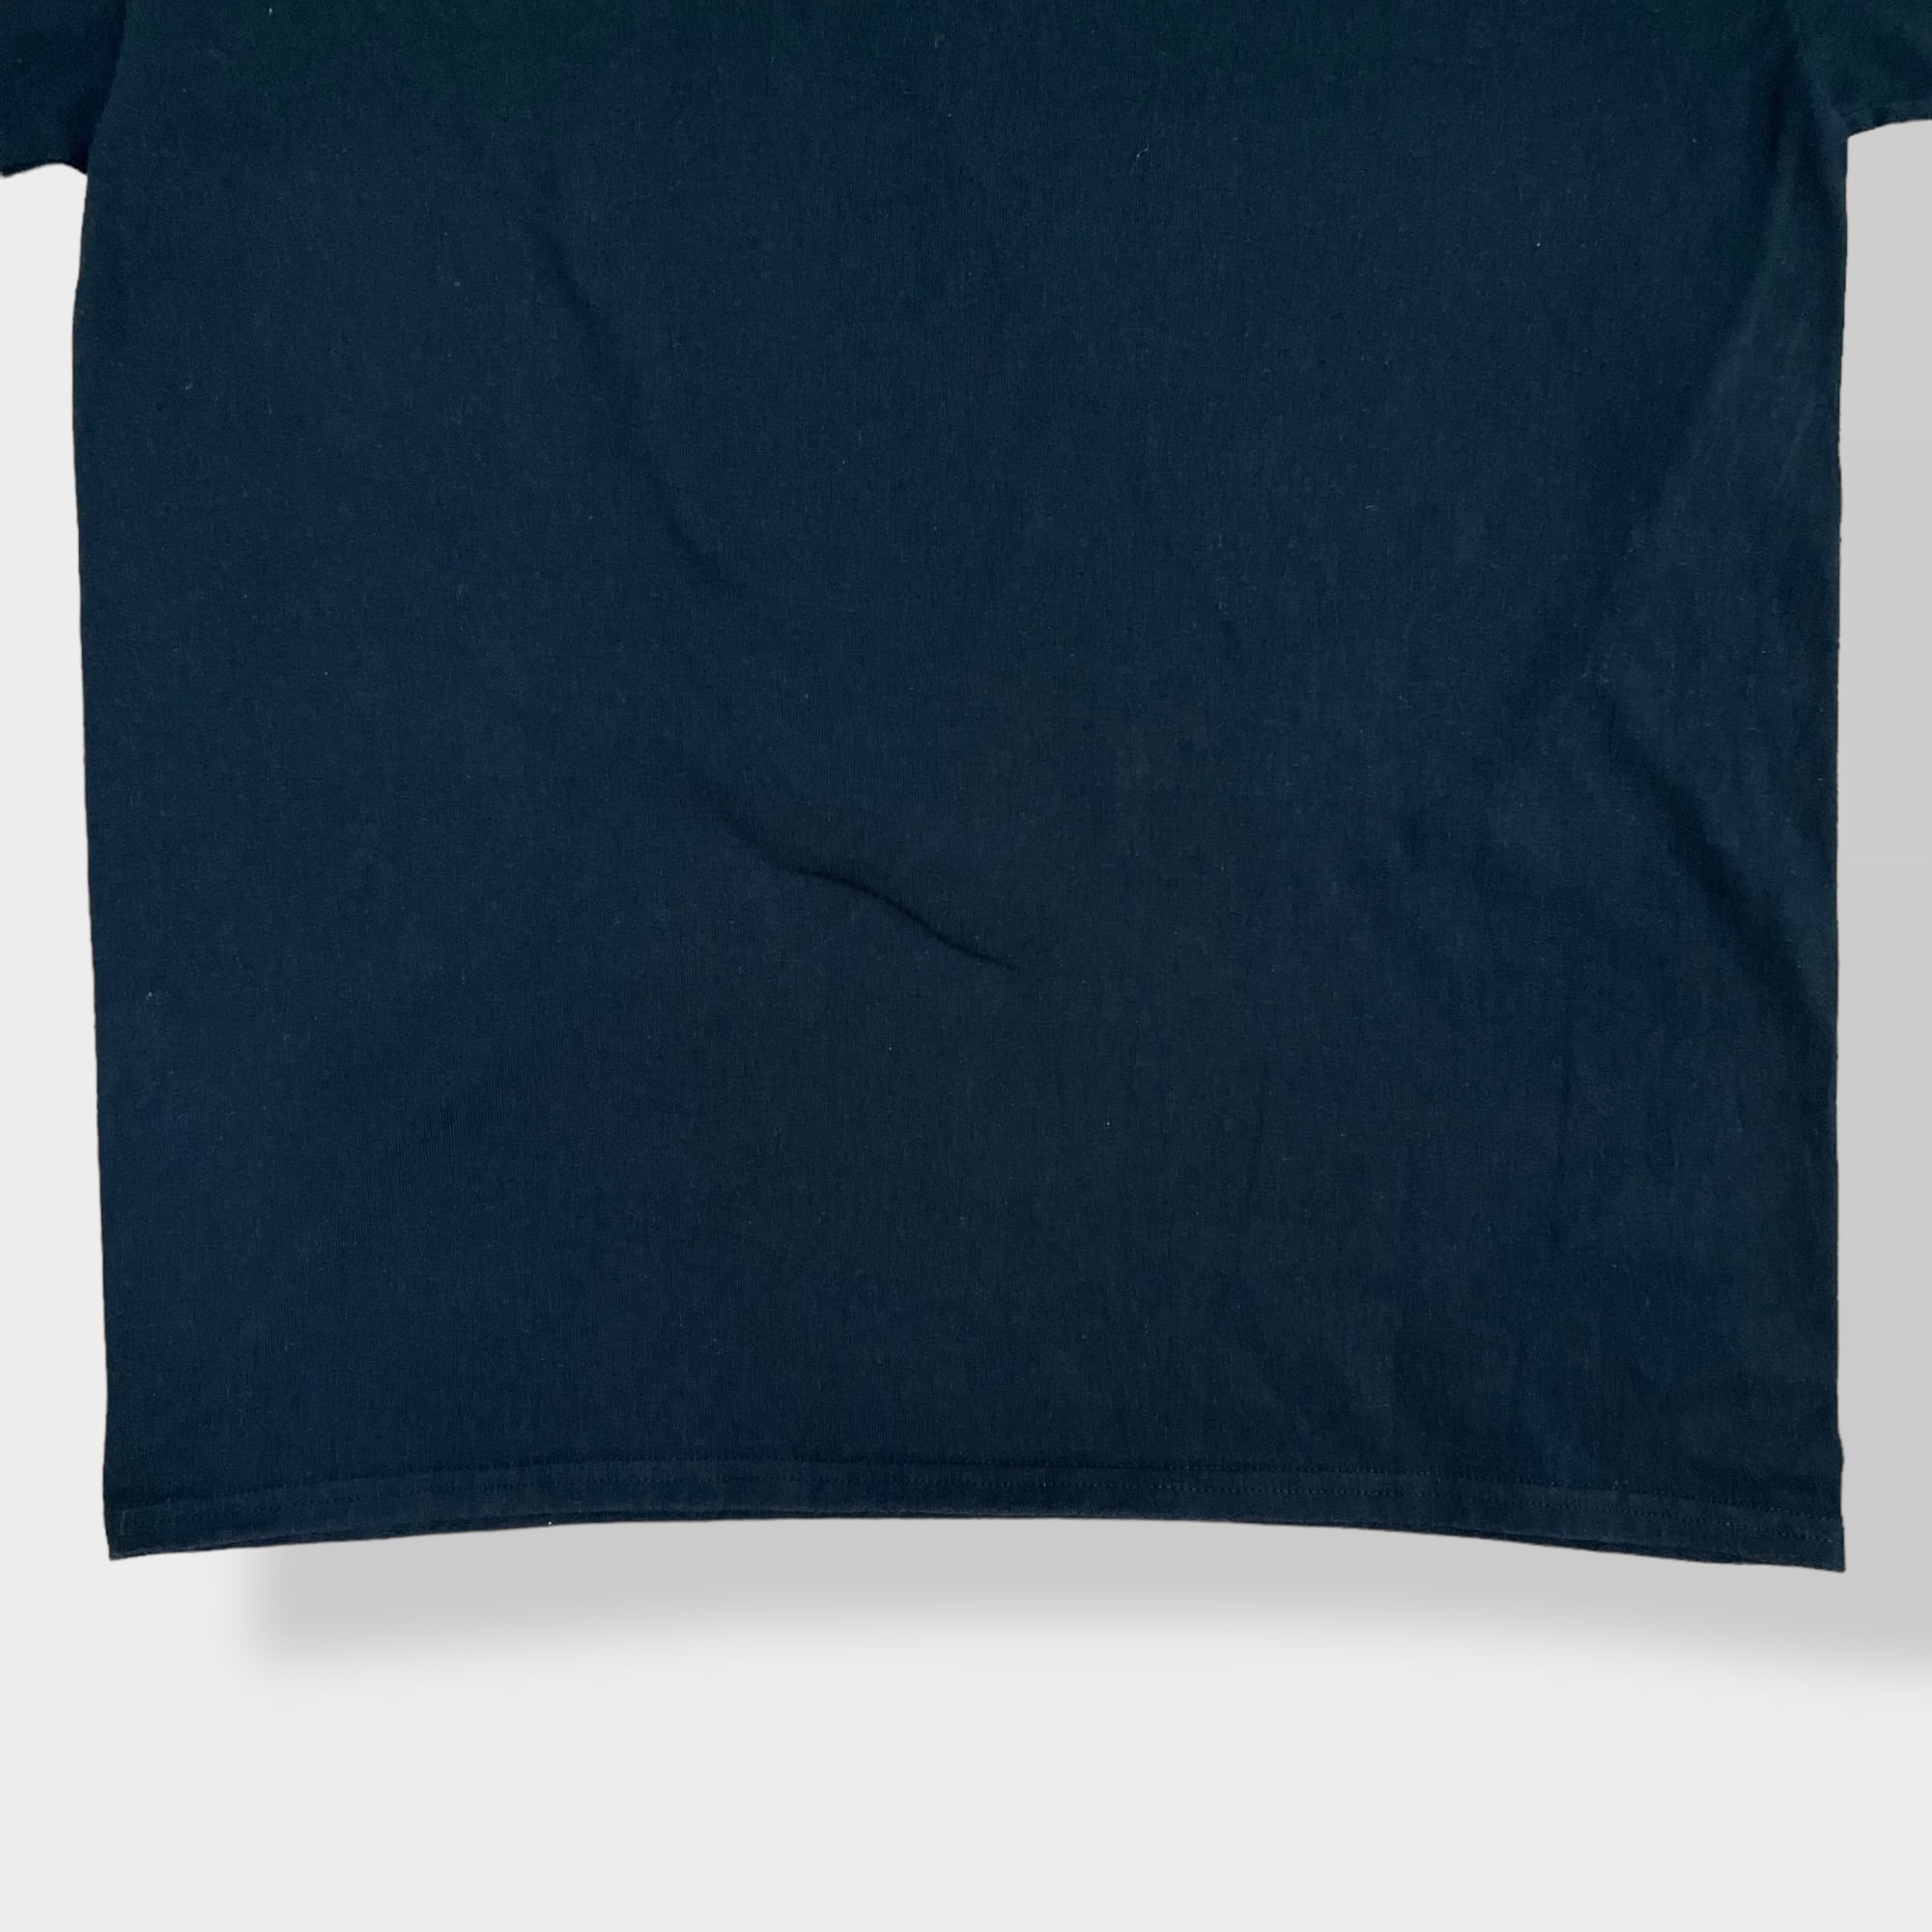 PORT&COMPANY】プリント Tシャツ SWIM&DIVE 水泳 バックプリント ロゴ